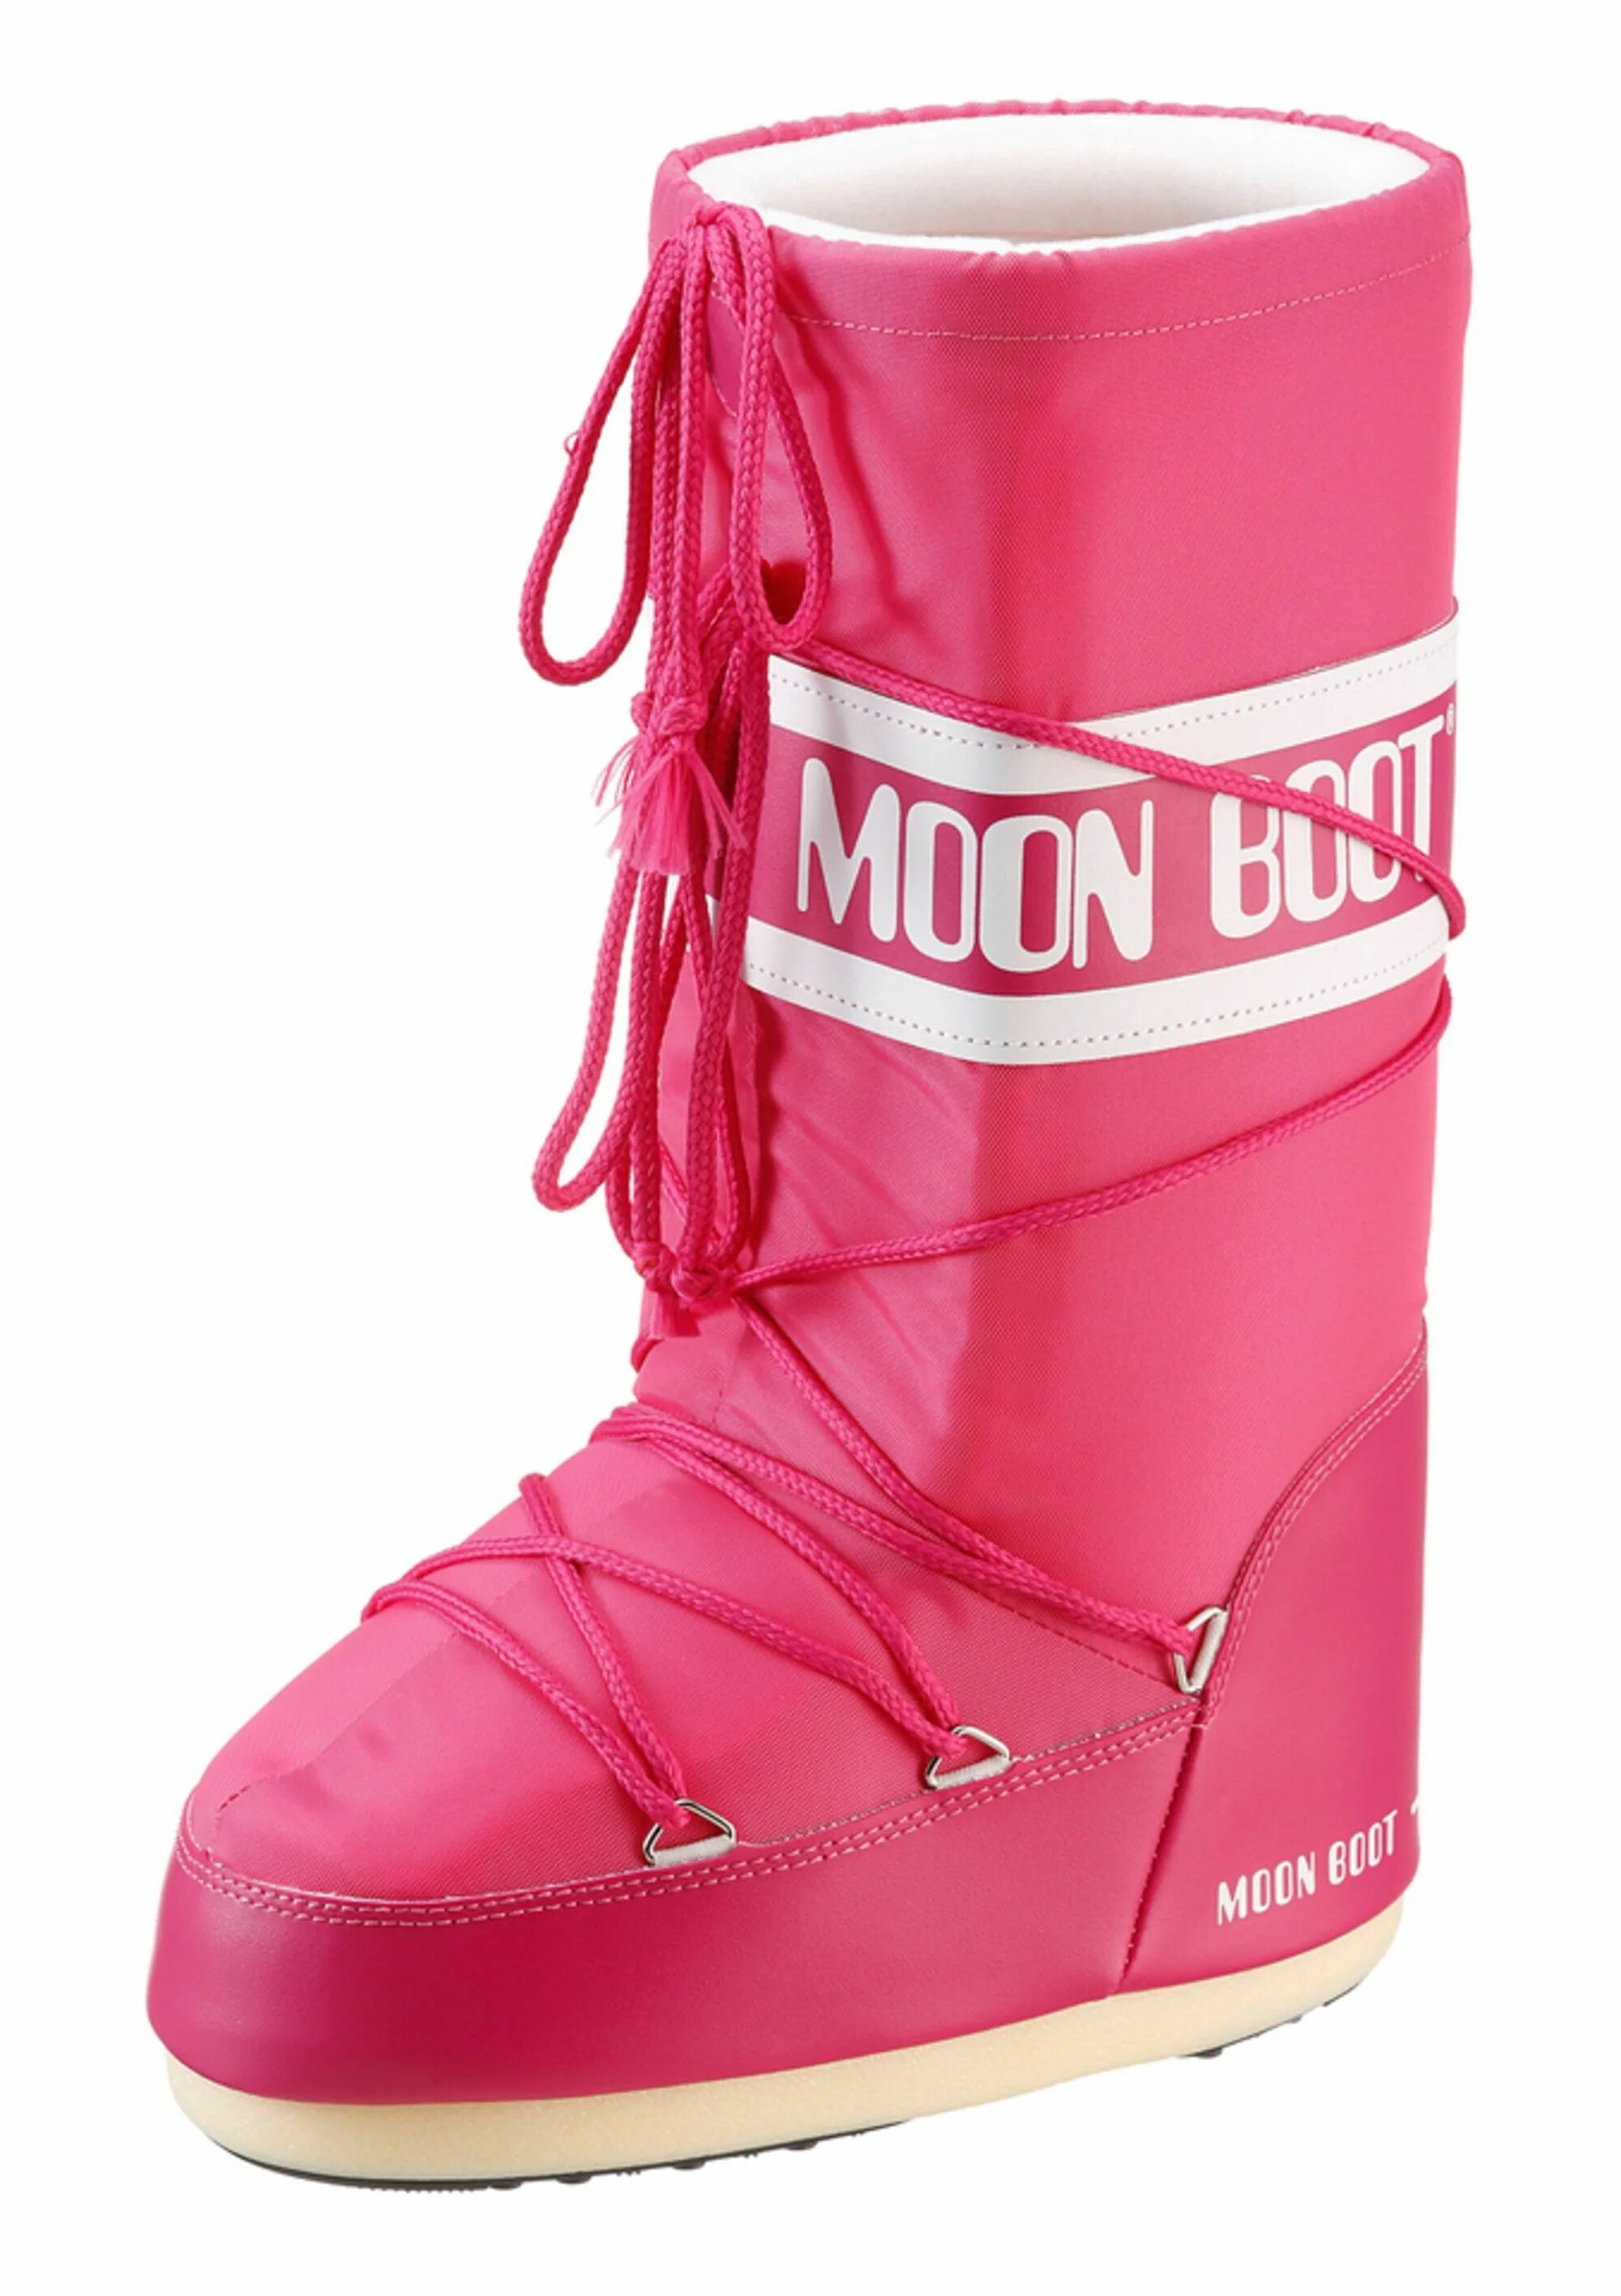 Обувь муна. Сапоги Moon Boot. Зимние ботинки Moon Boot. Nike Moon Boot. Moon Boot коллаборация.